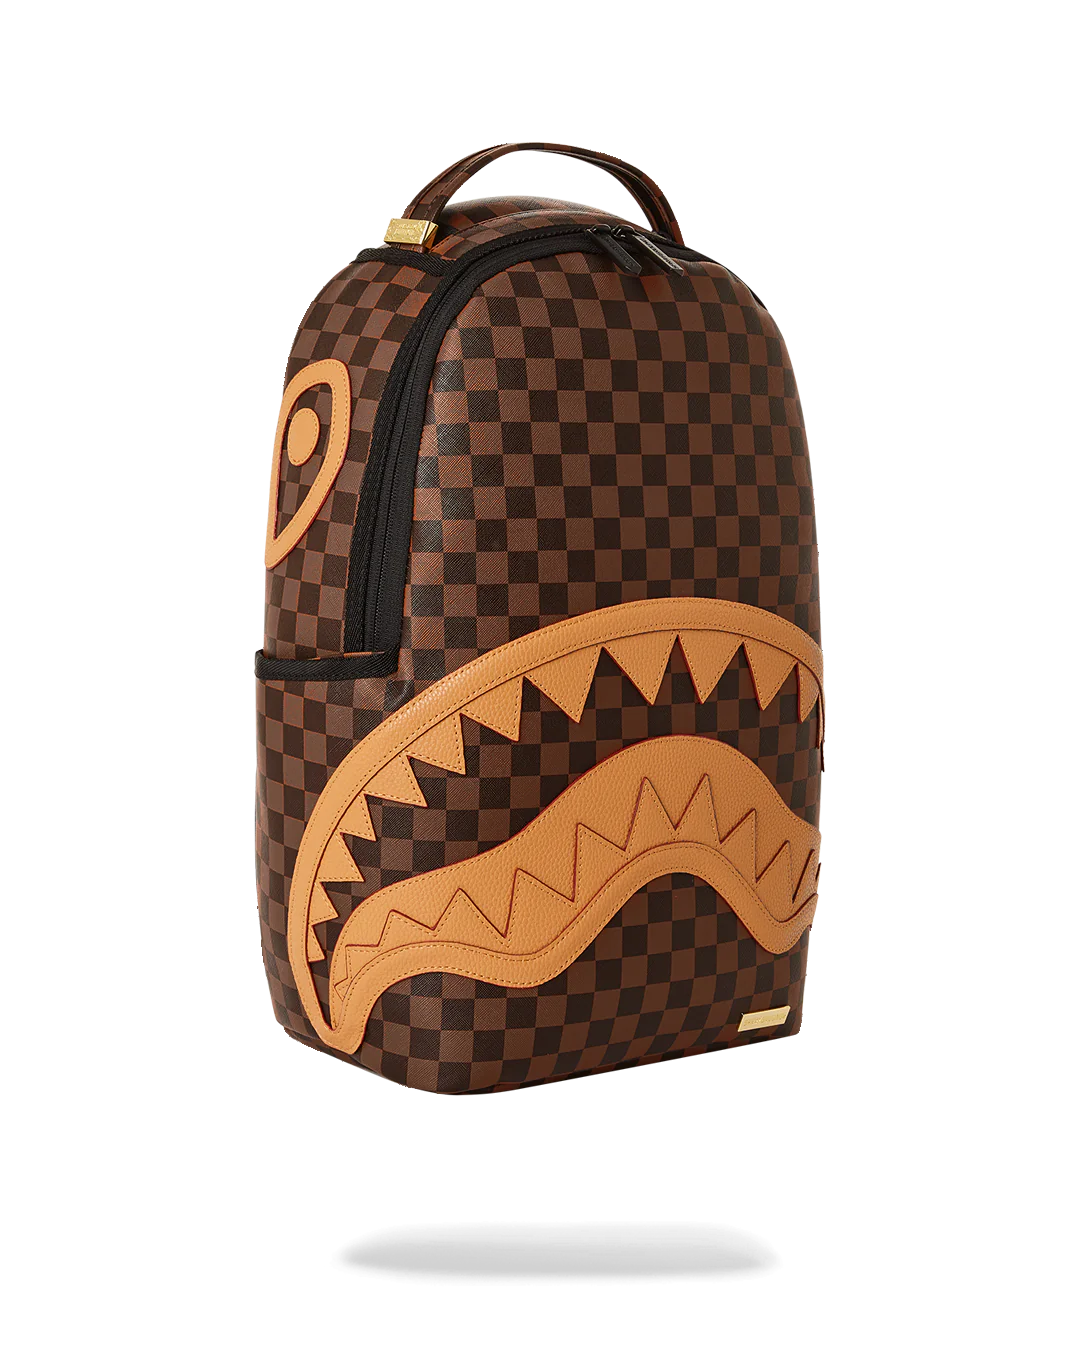 Shark Customization for Louis Vuitton Travel Bag Customer 